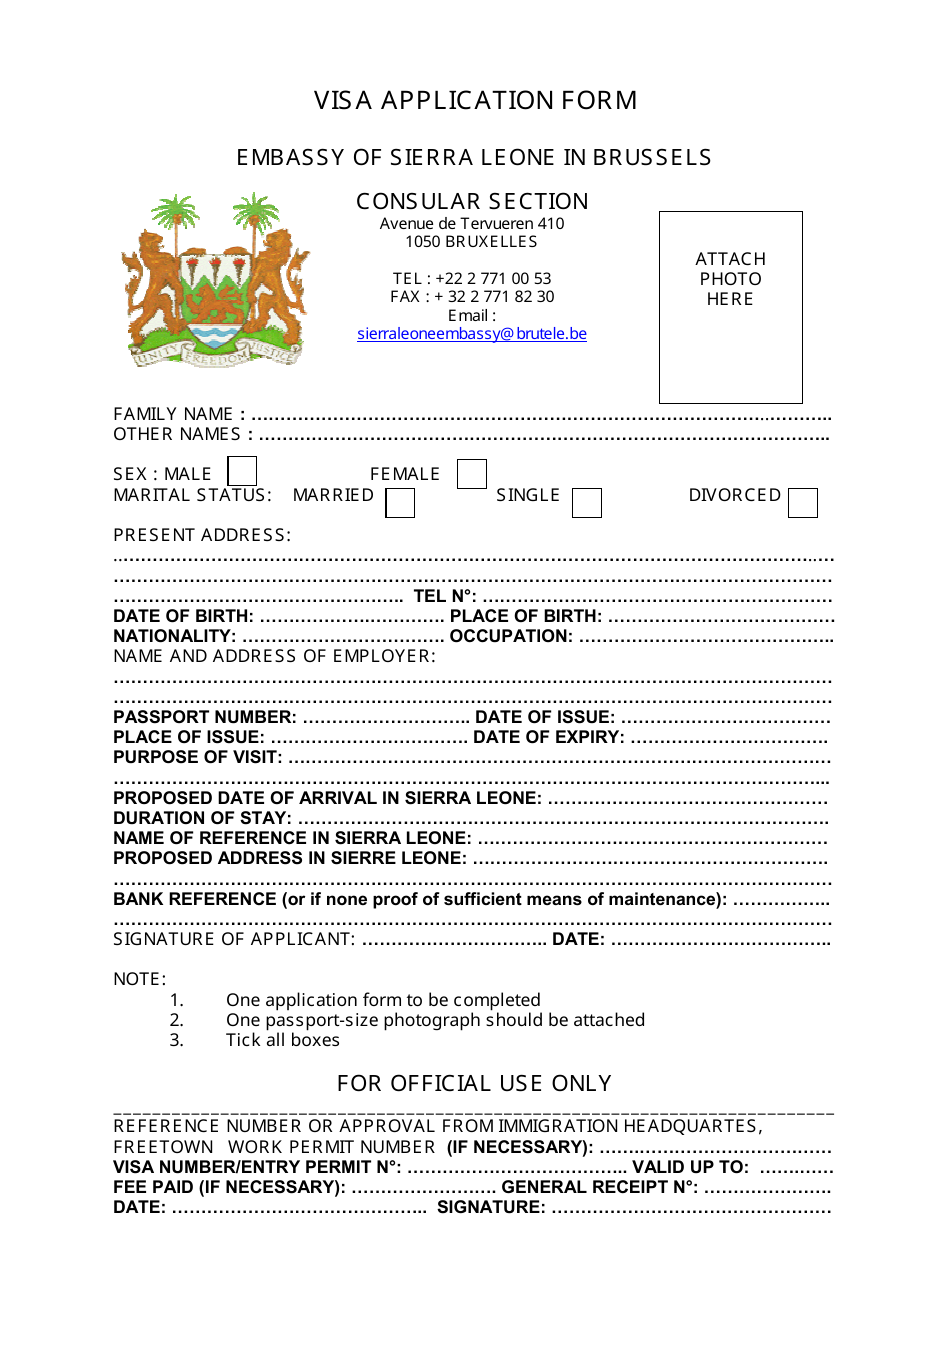 Sierra Leone Visa Application Form - Embassy of Sierra Leone - Brussels-Capital Region, Belgium, Page 1